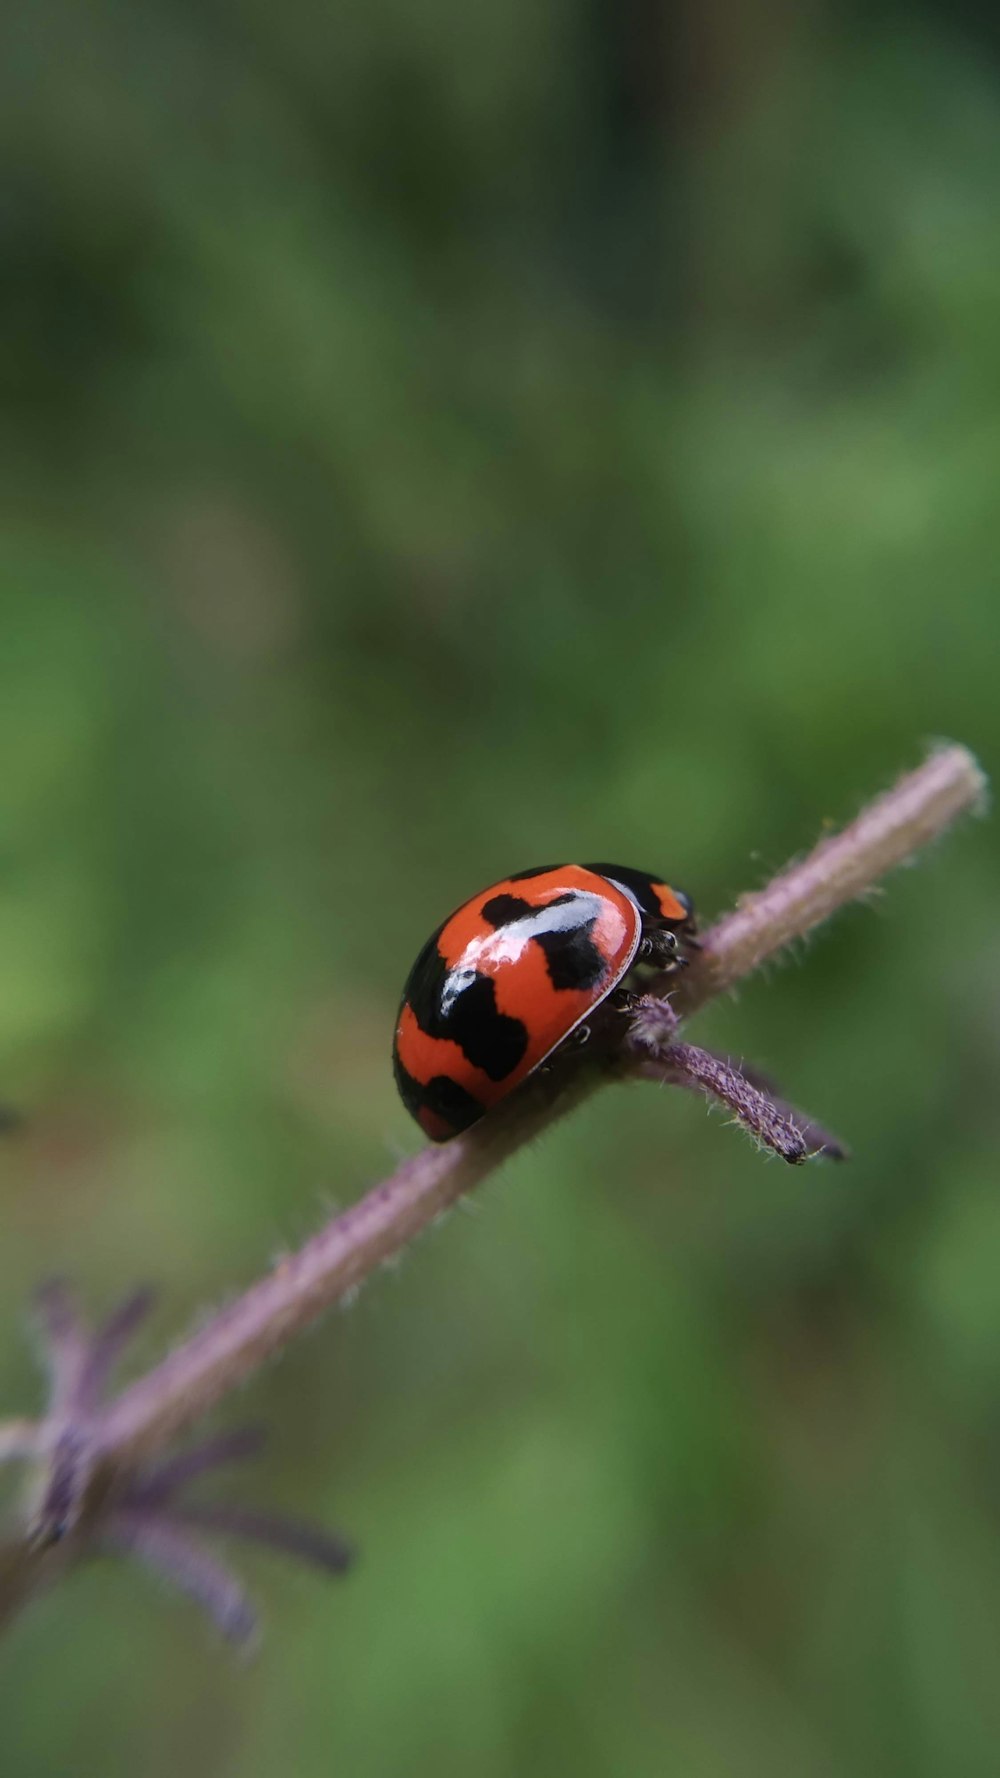 orange and black ladybug on green leaf in close up photography during daytime